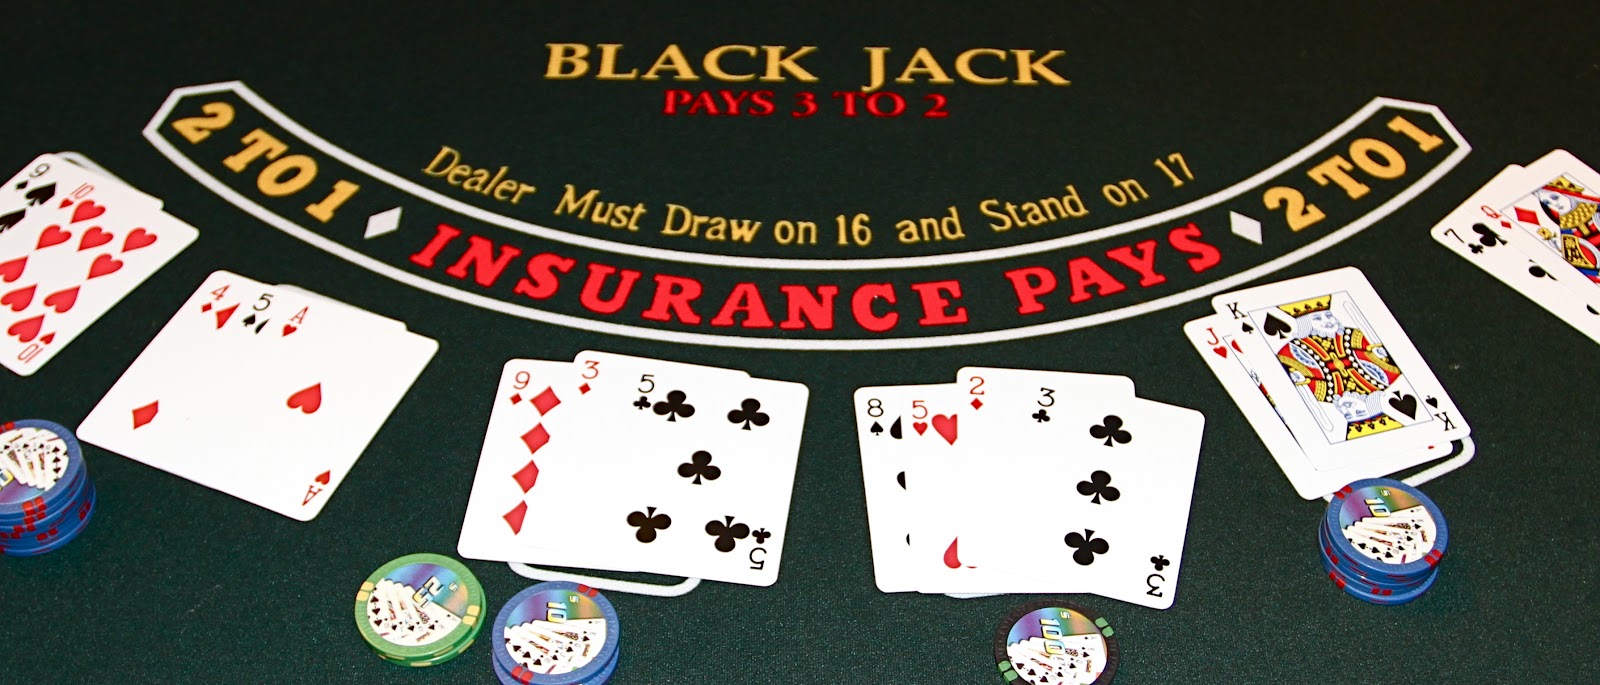 Astuces pour gagner au blackjack